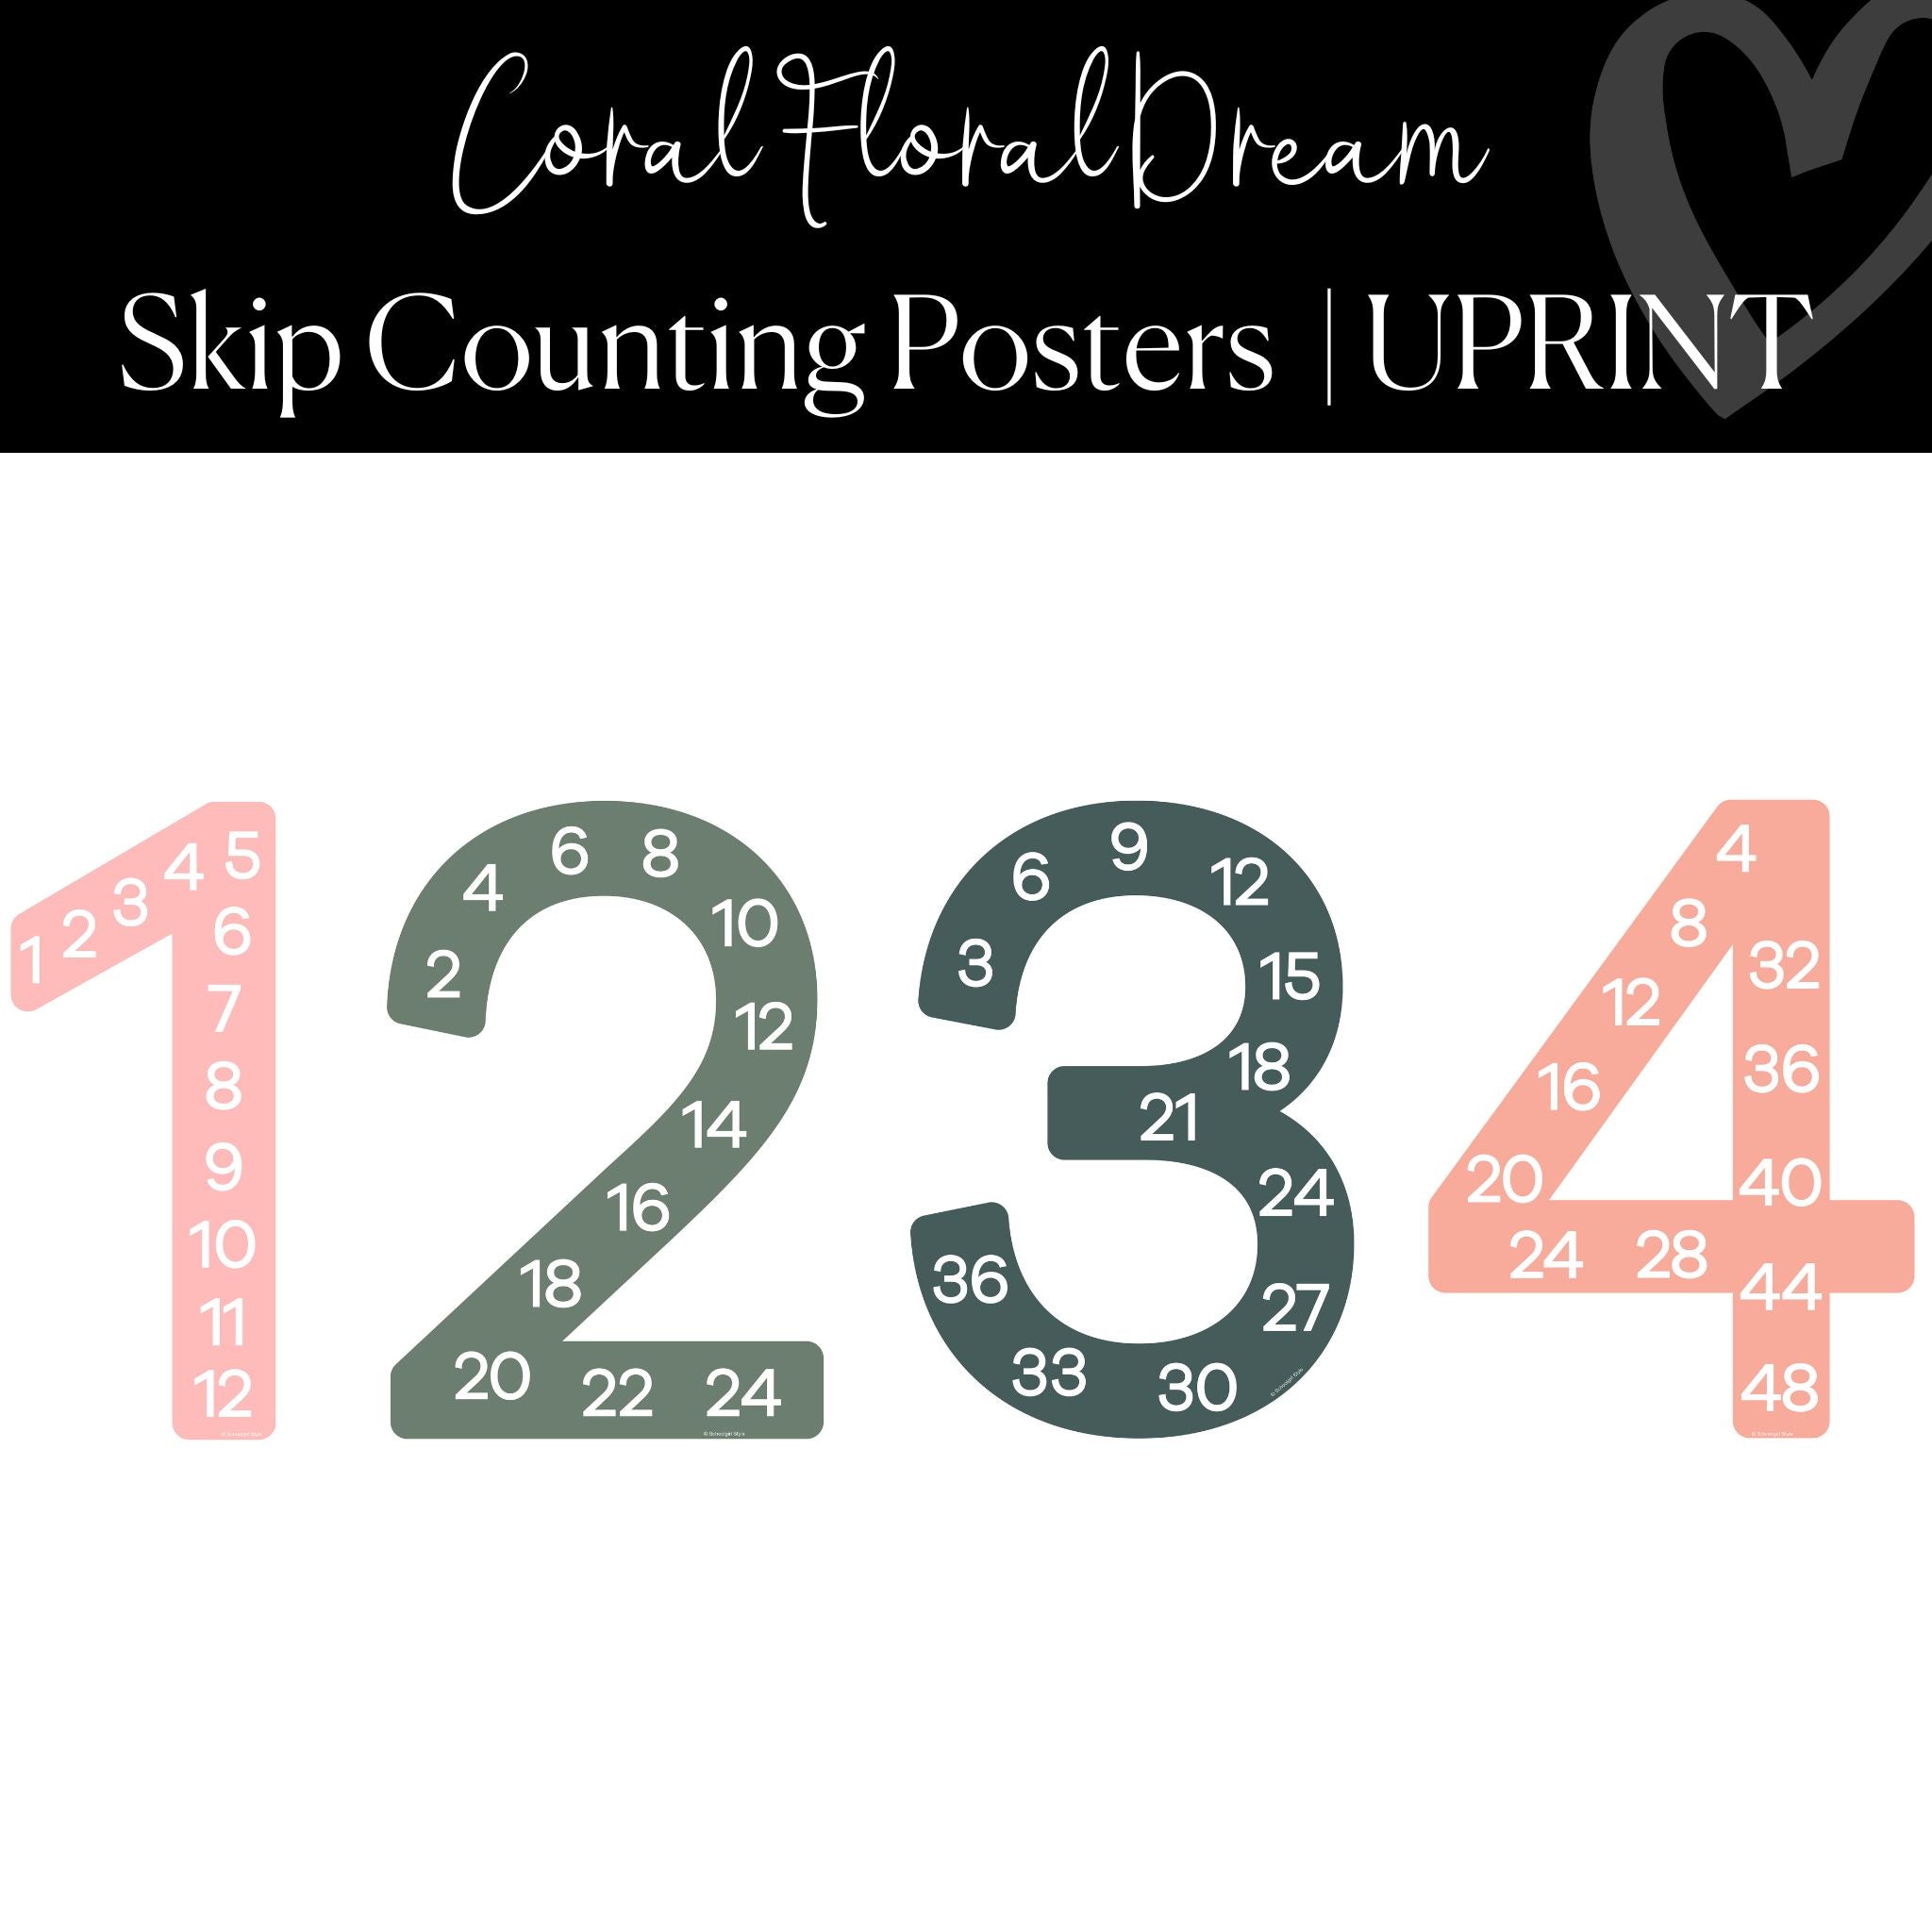 Printable Skip Counting Posters | Rainbow Classroom Decor | UPRINT |  Sprinkle Kindness | Schoolgirl Style